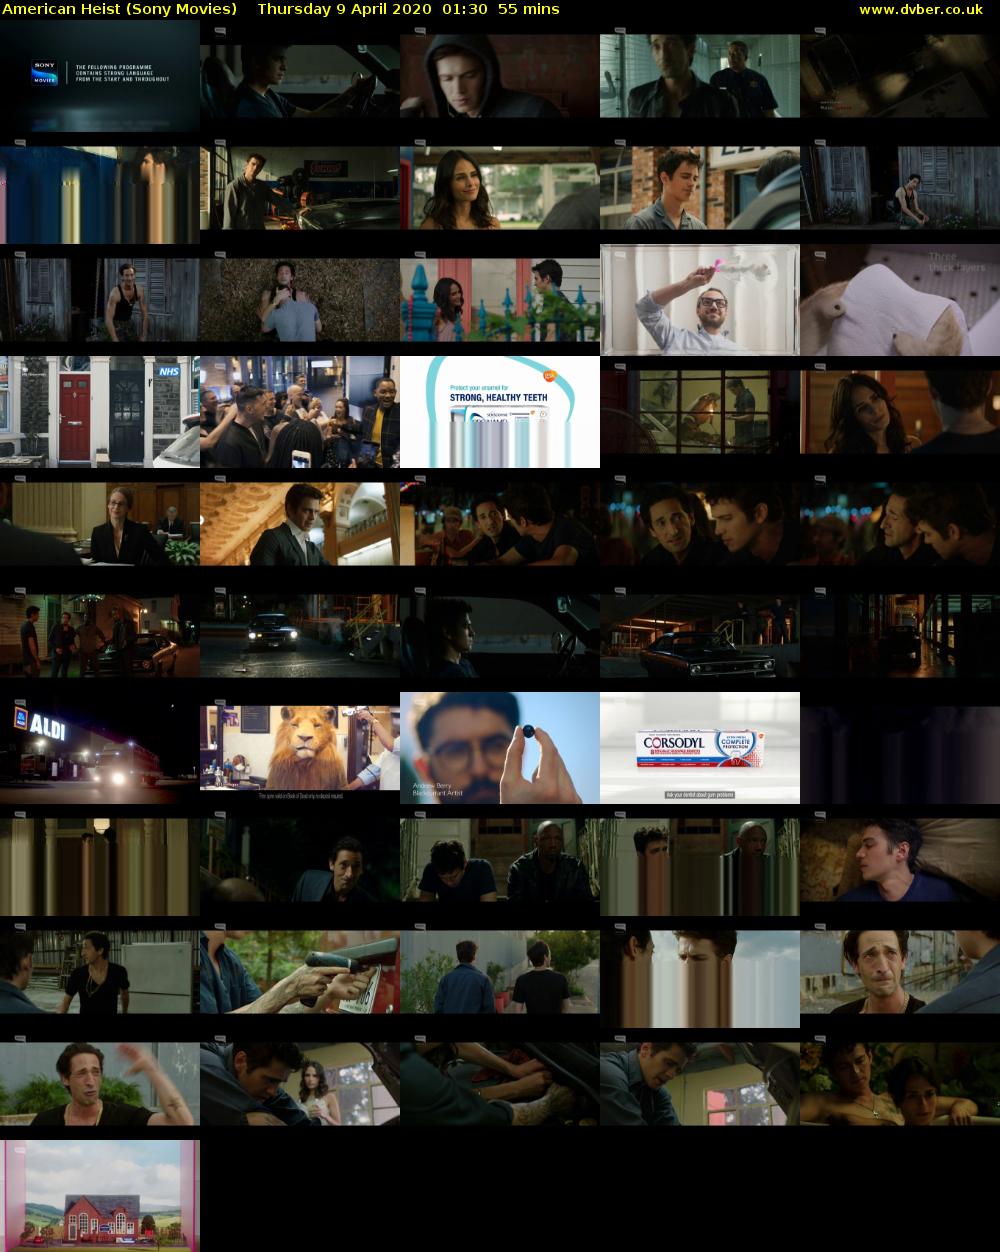 American Heist (Sony Movies) Thursday 9 April 2020 01:30 - 02:25